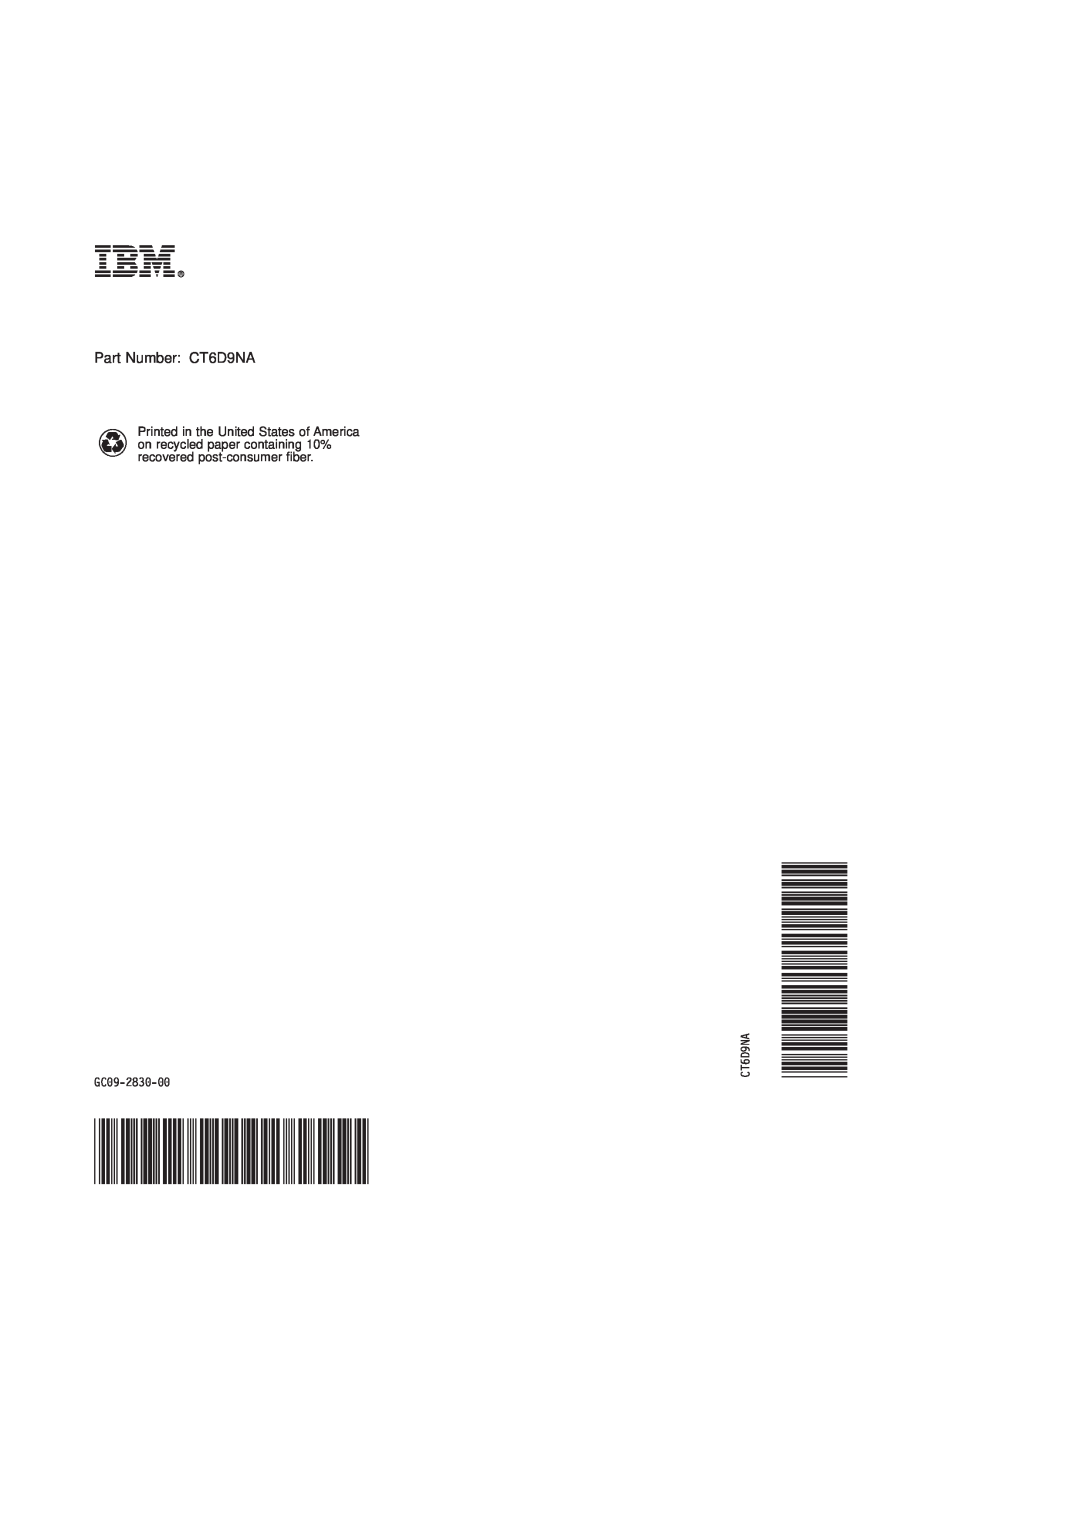 IBM GC09-2830-00 manual Ibmr, Part Number CT6D9NA 